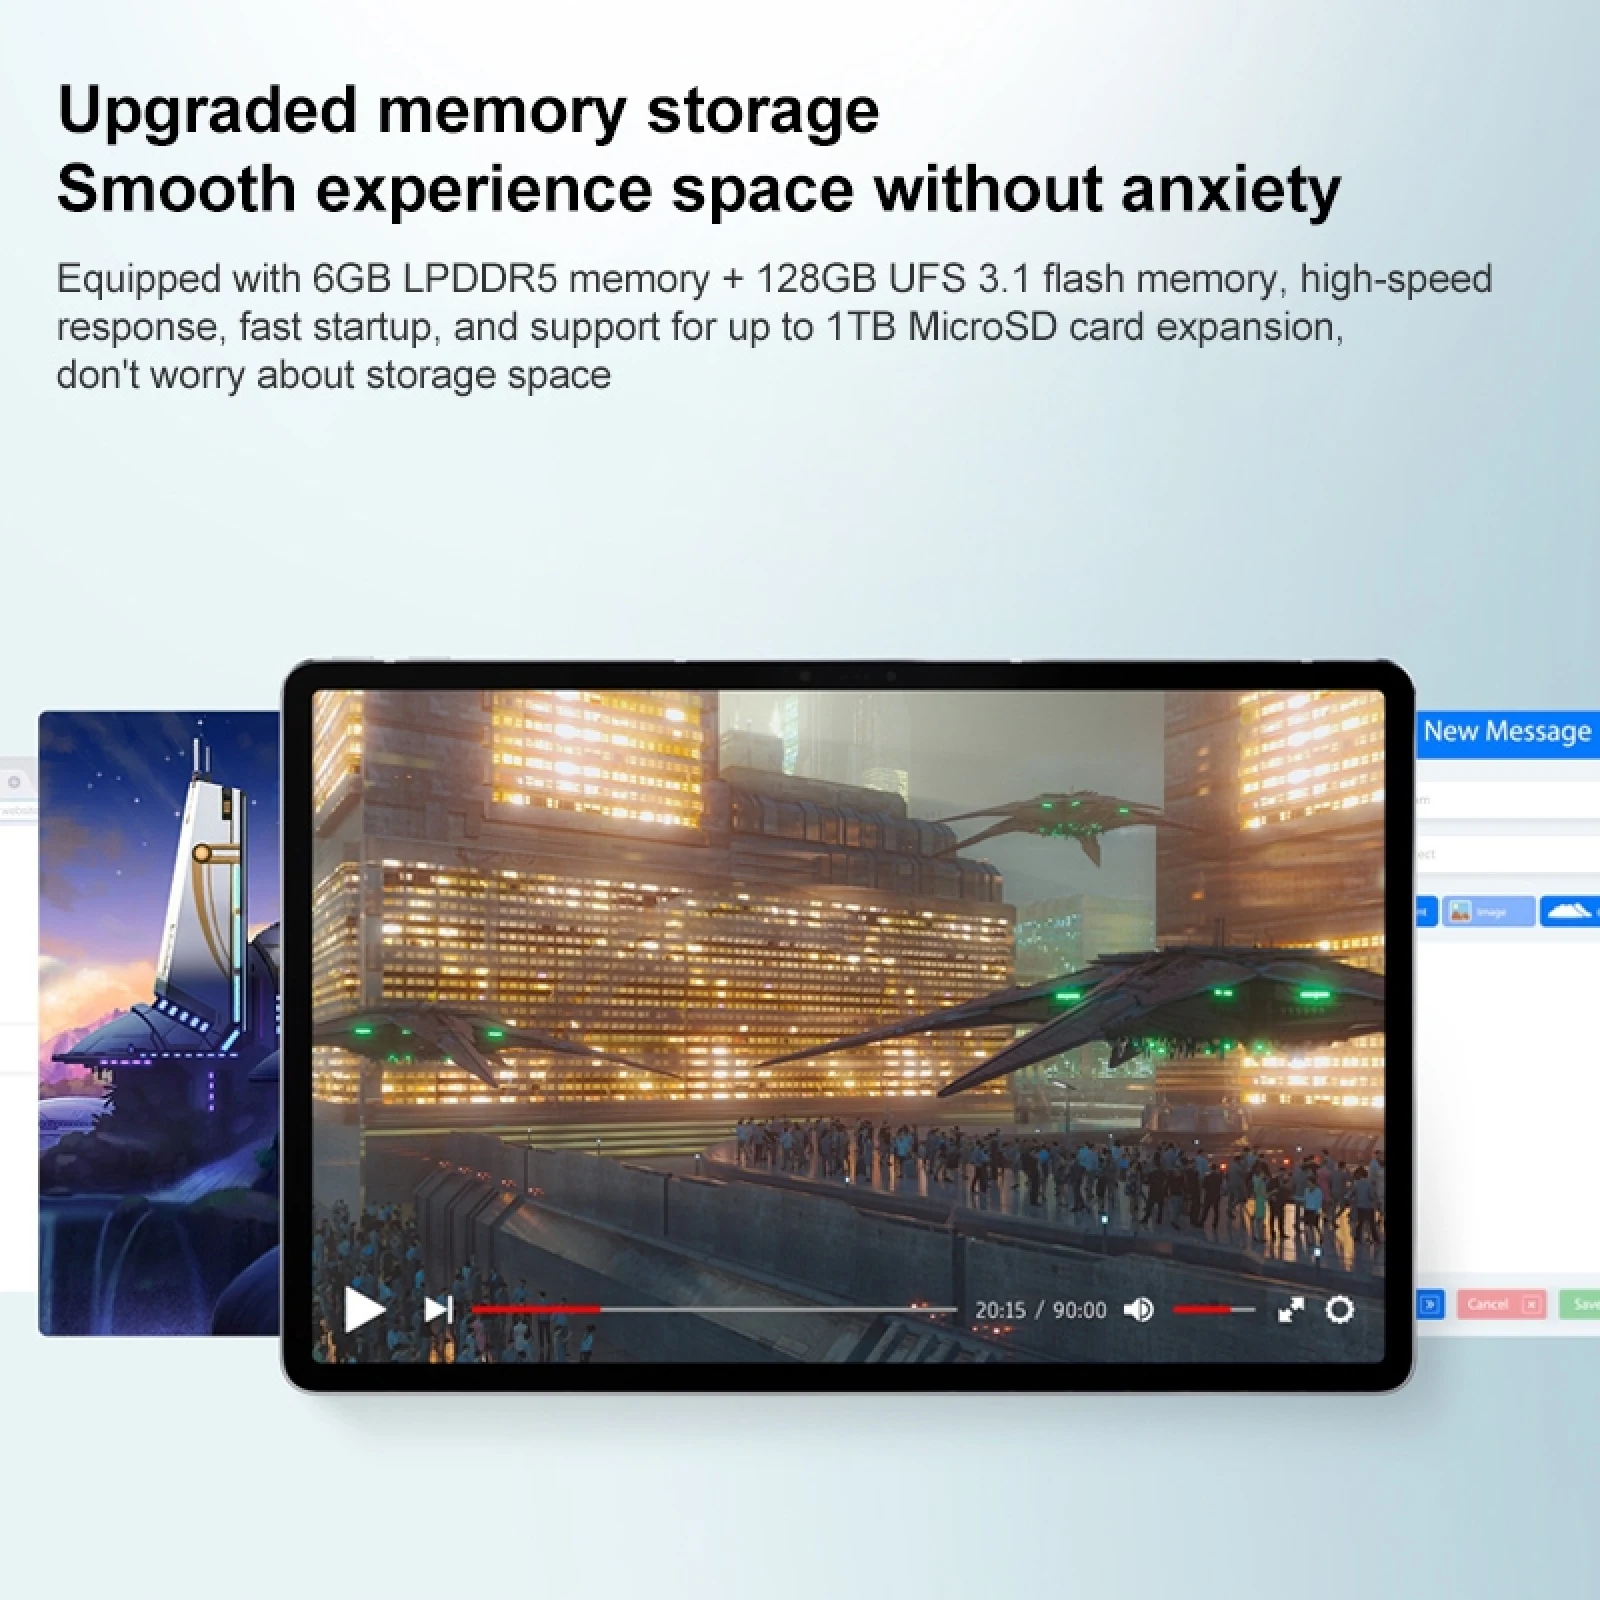 Original Lenovo Xiaoxin Pad Pro 2021 11.5" 2560x1600P OLED 90Hz Qualcomm SD870 3.19GHz Octa Core 6GB Ram 128GB Rom 8600mAh MID